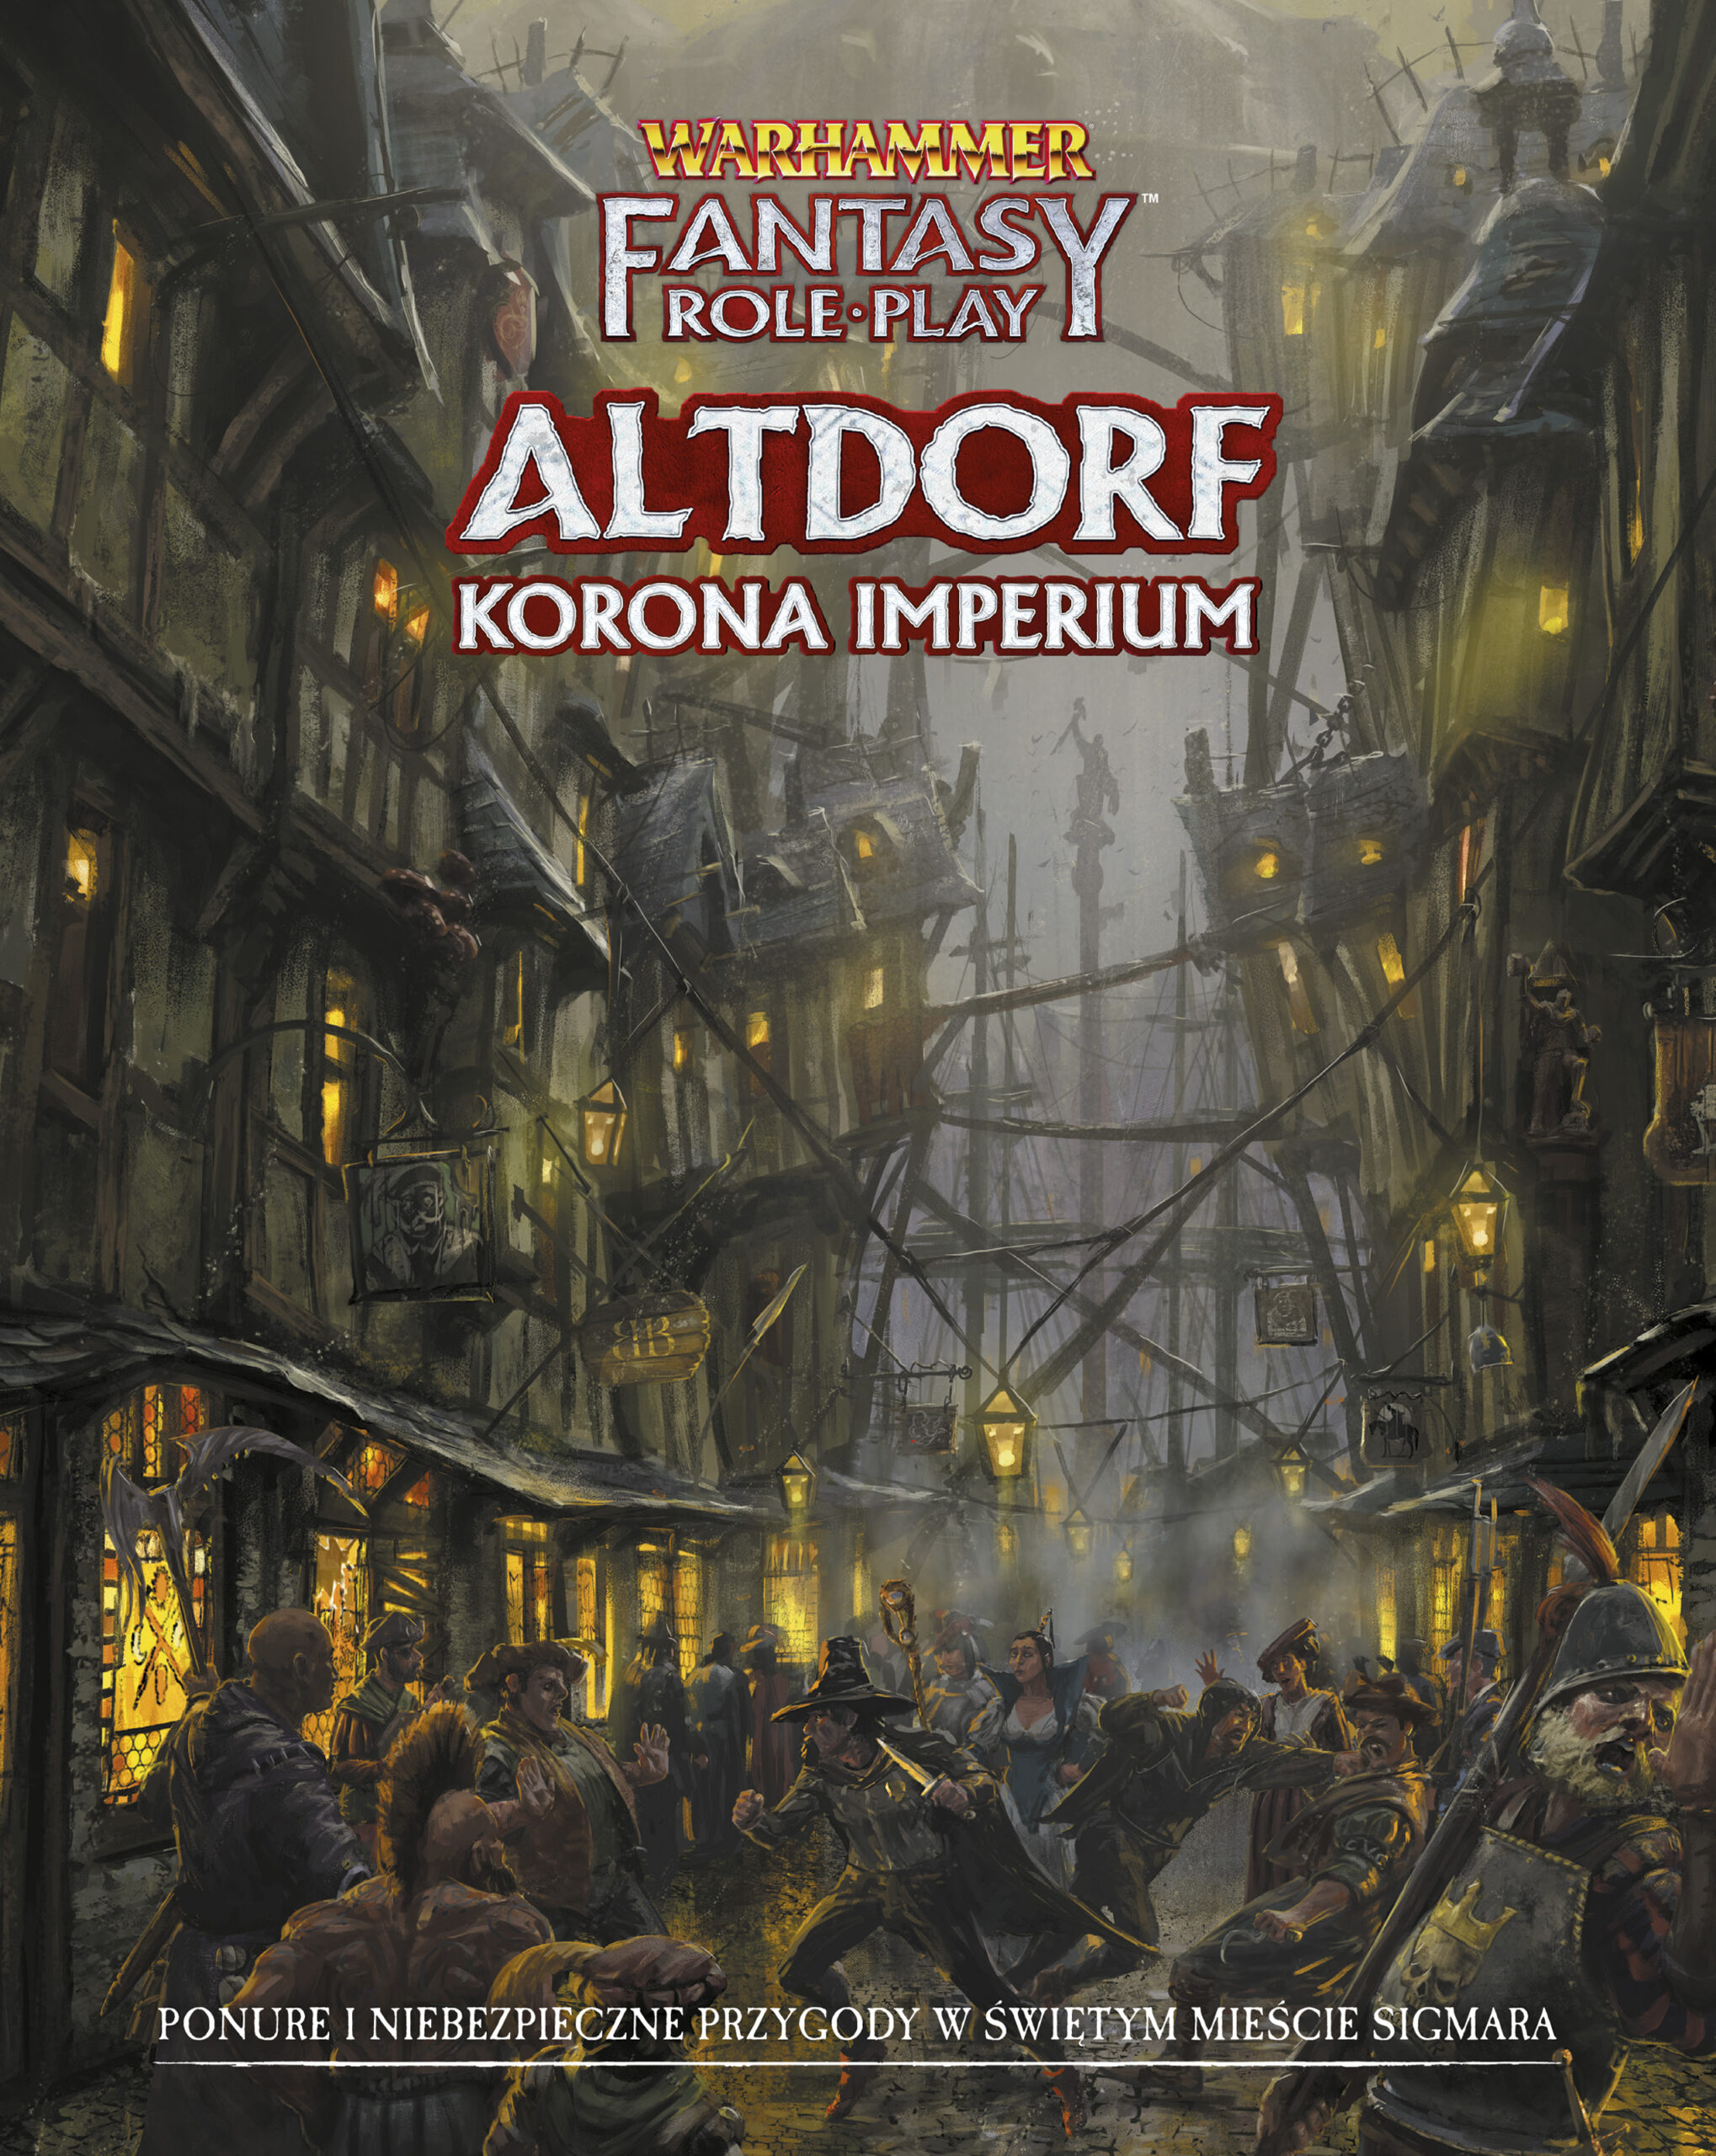 Warhammer Altdorf: Korona Imperium